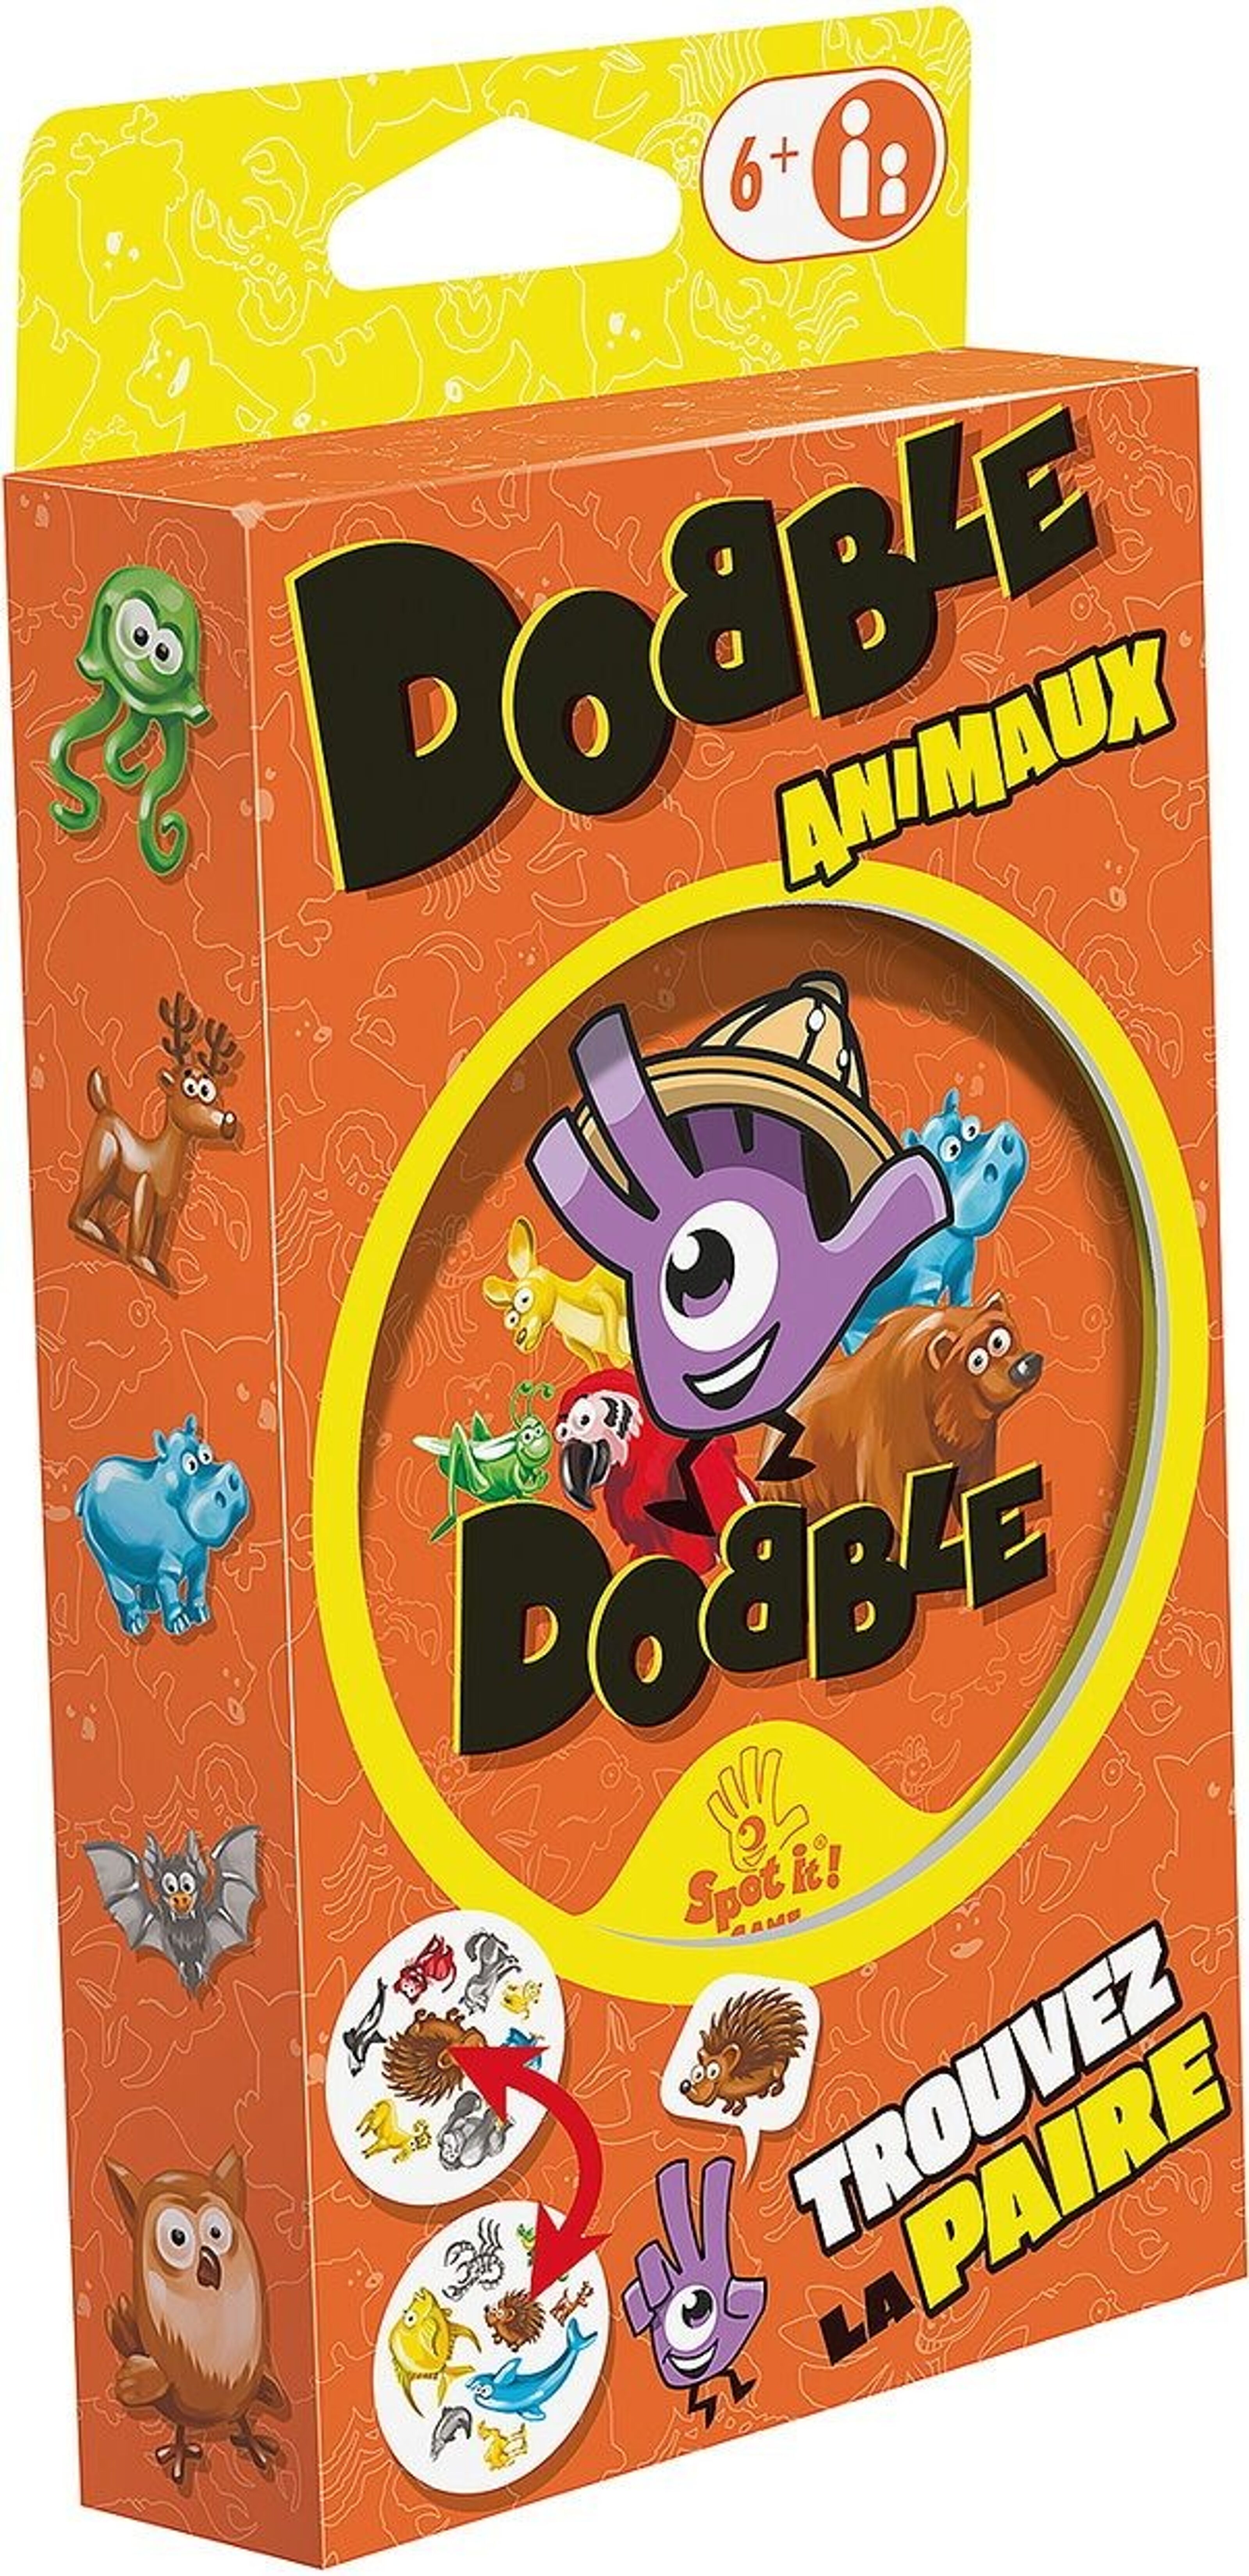 Dobble Teams - Le Dooble en Équipes - Asmodée